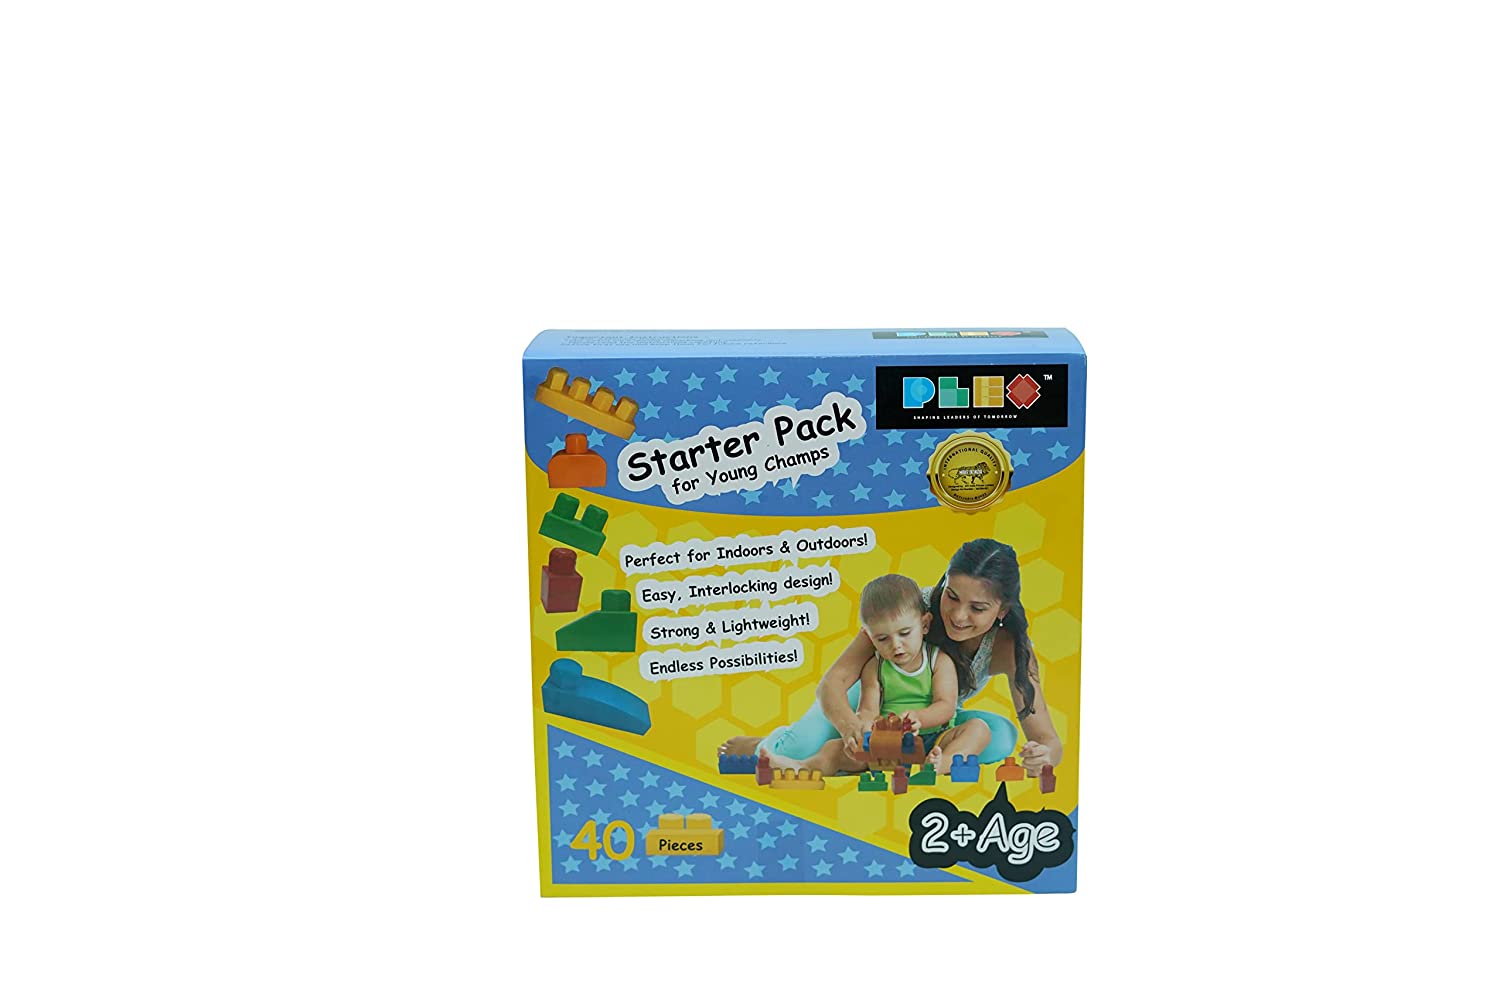 Plex Starter Pack 40pcs Polypropylene material Toy Game